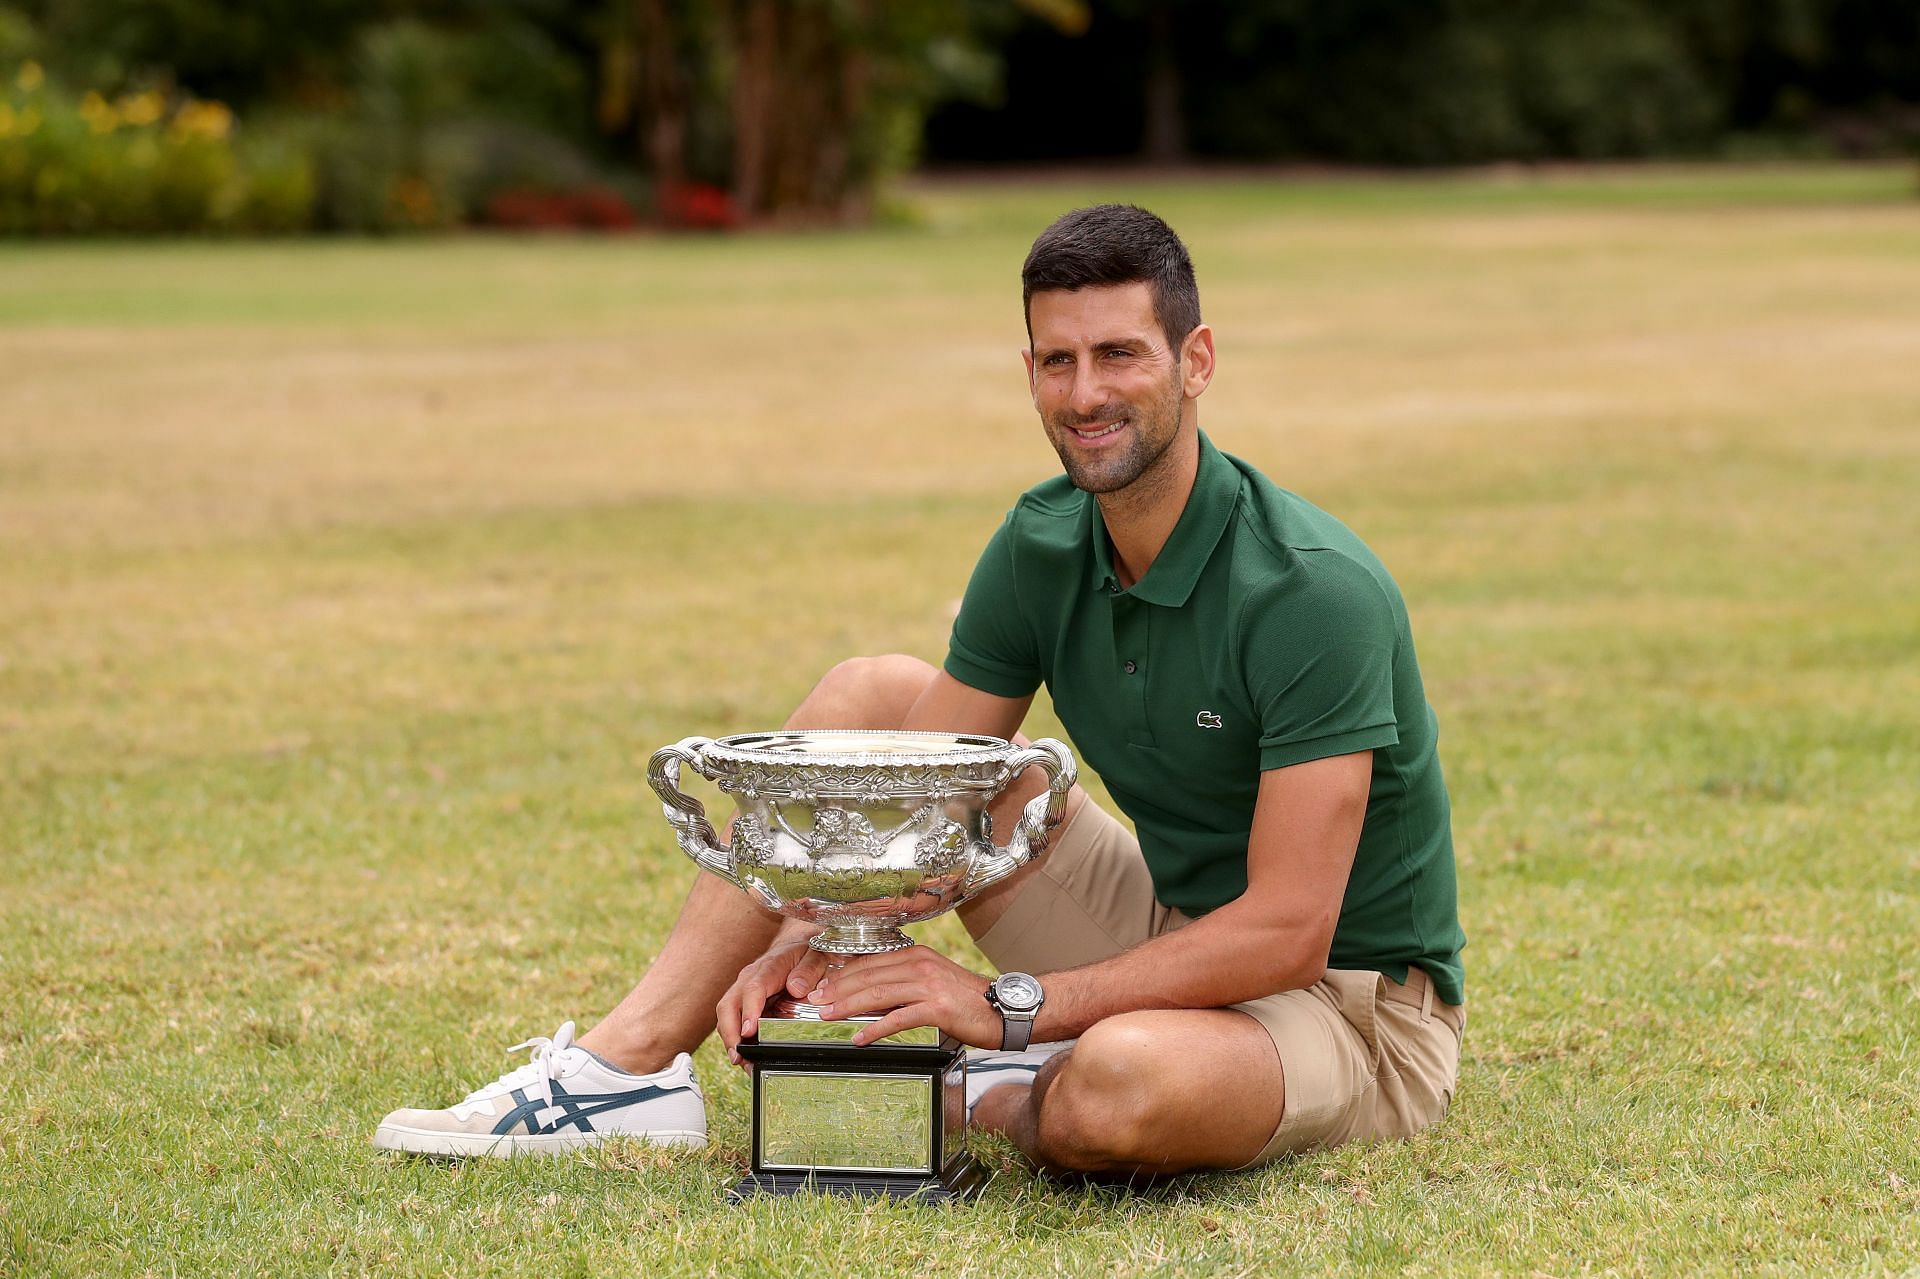 Novak Djokovic won his 22nd Grand Slam at the Australian Open